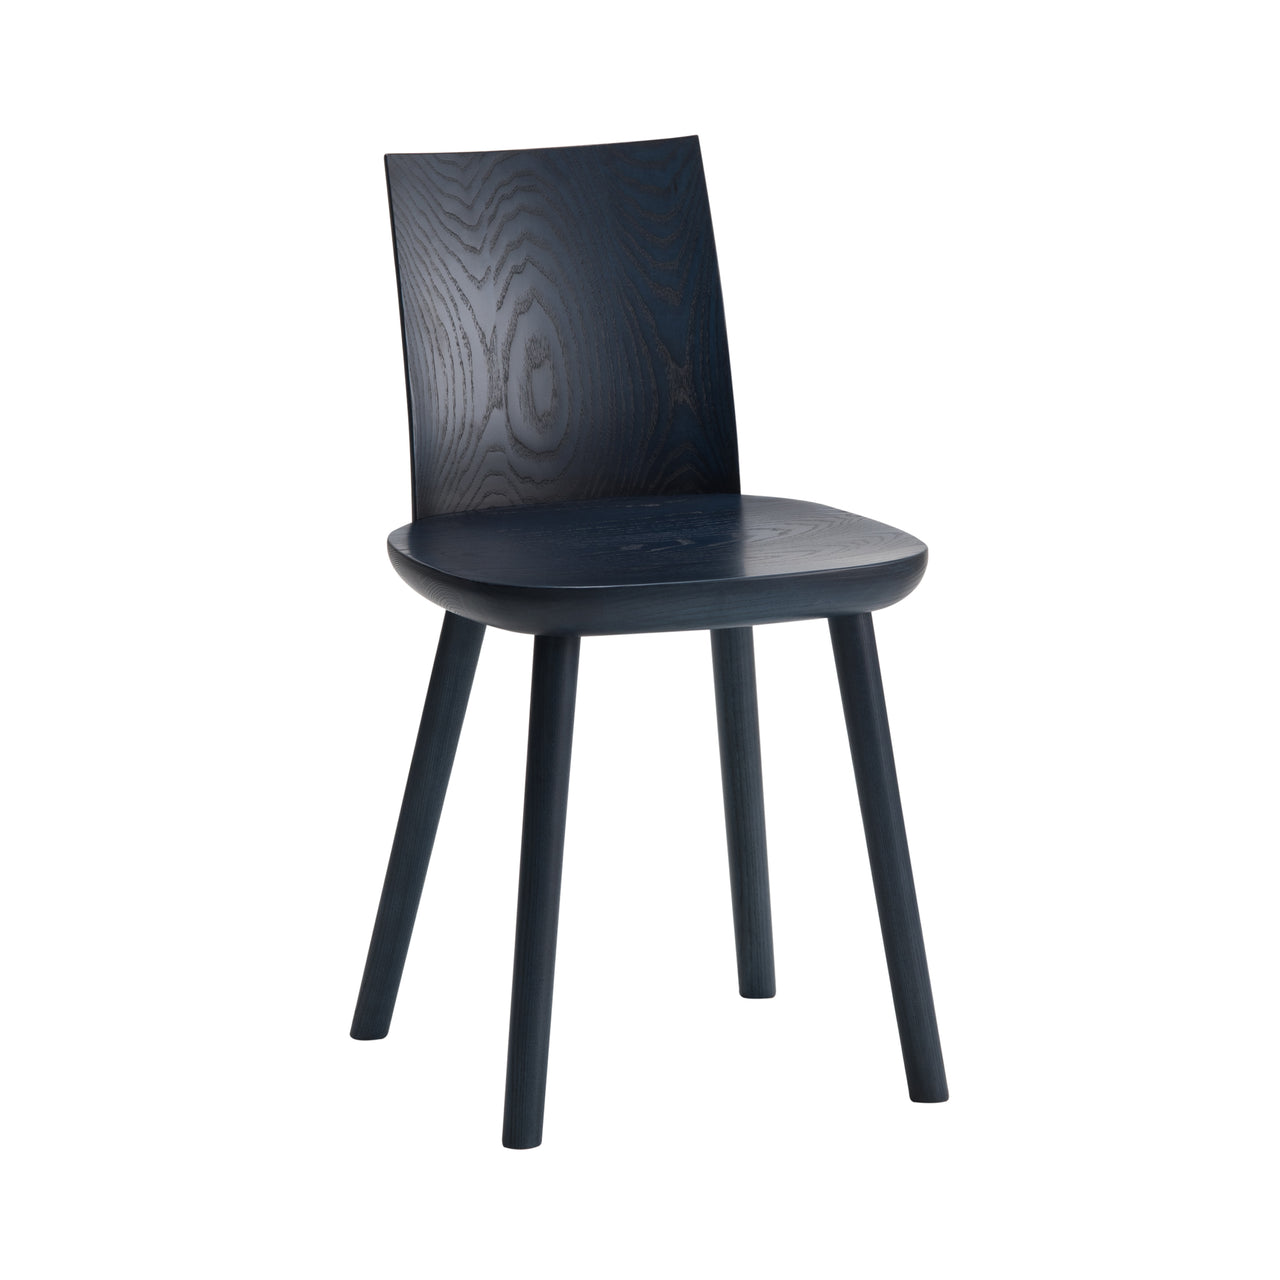 Blest Chair: Indigo Ash